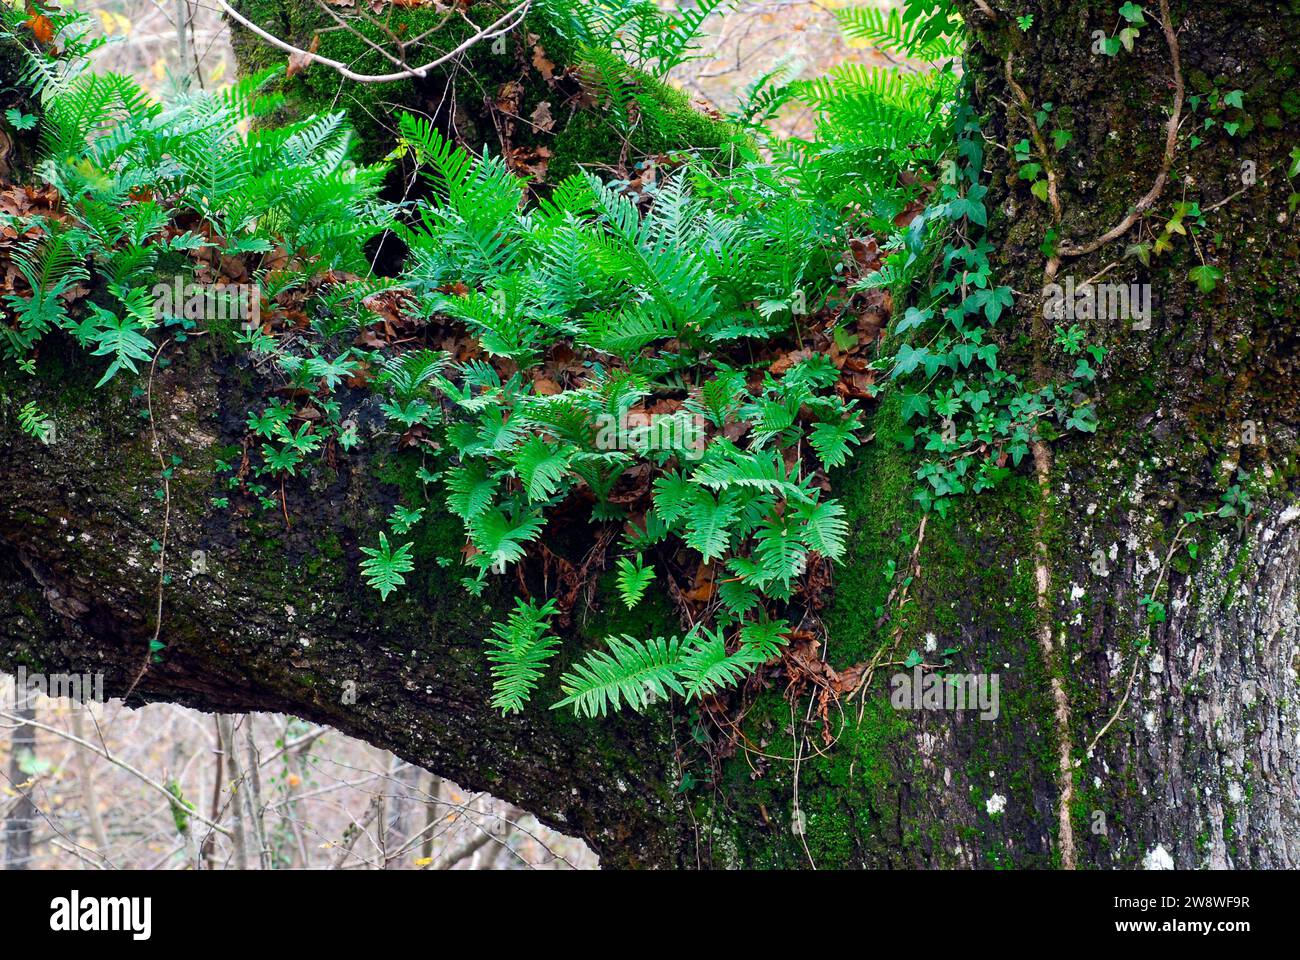 Polypodium ferns (Polypodium cambricum) on the trunk of an oak. Stock Photo